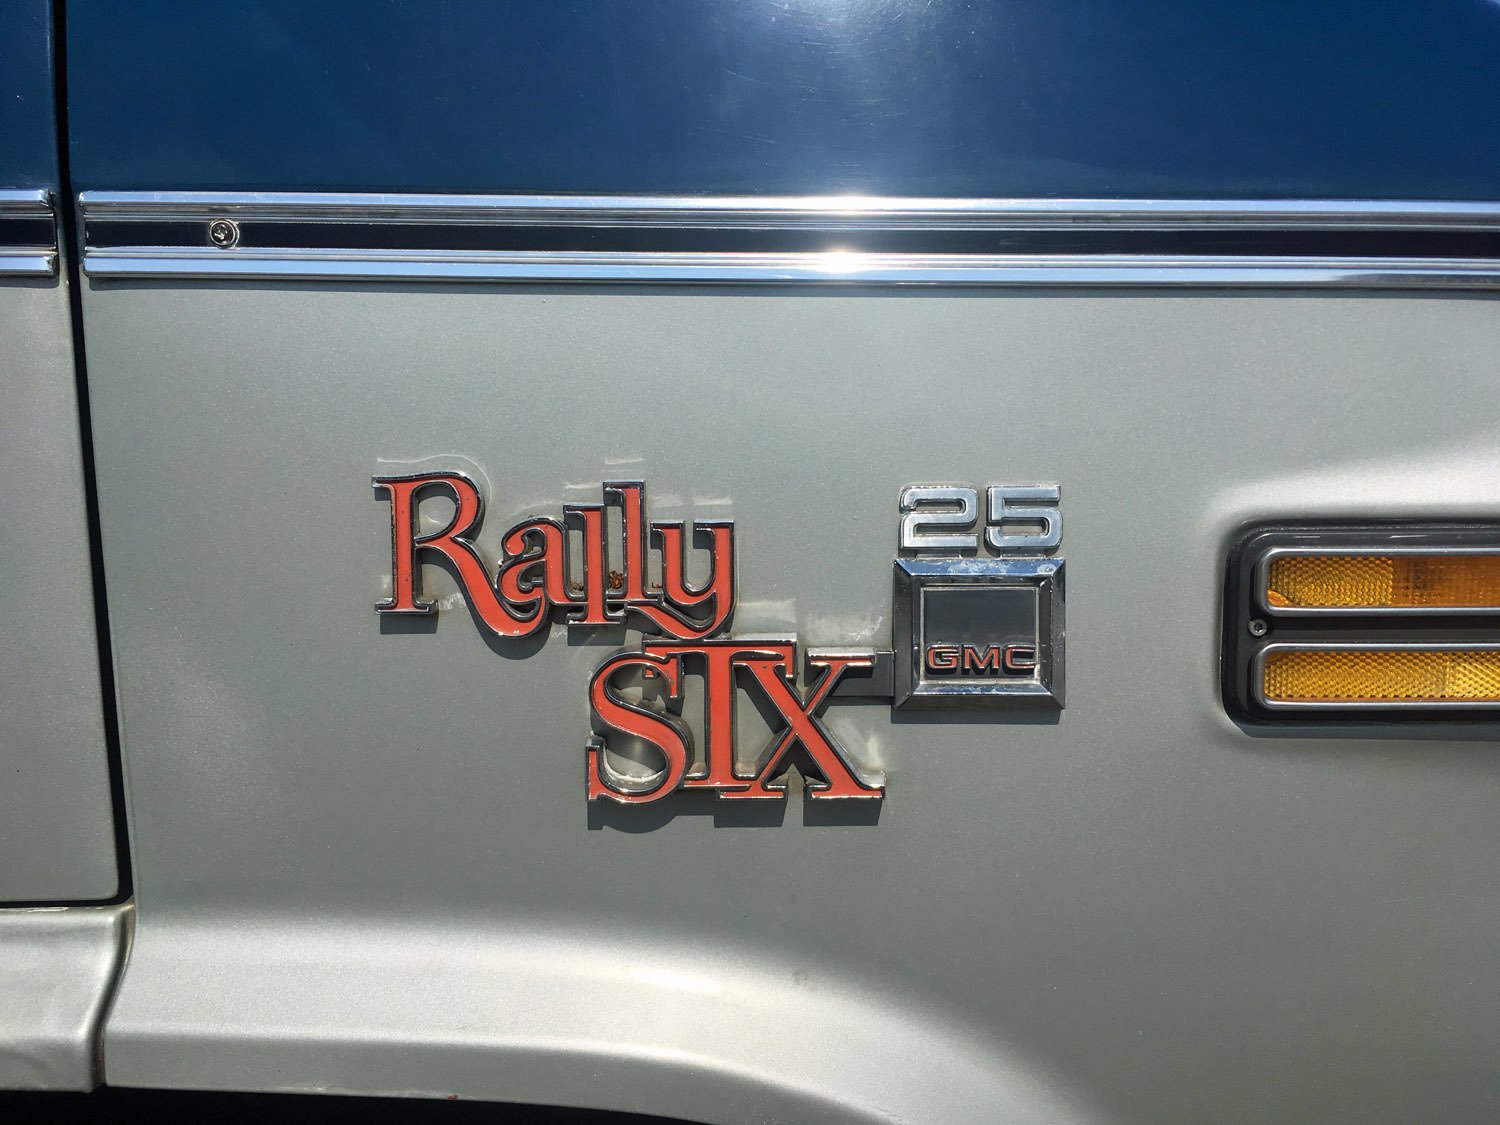 1979 GMC Rally STX 25 Van